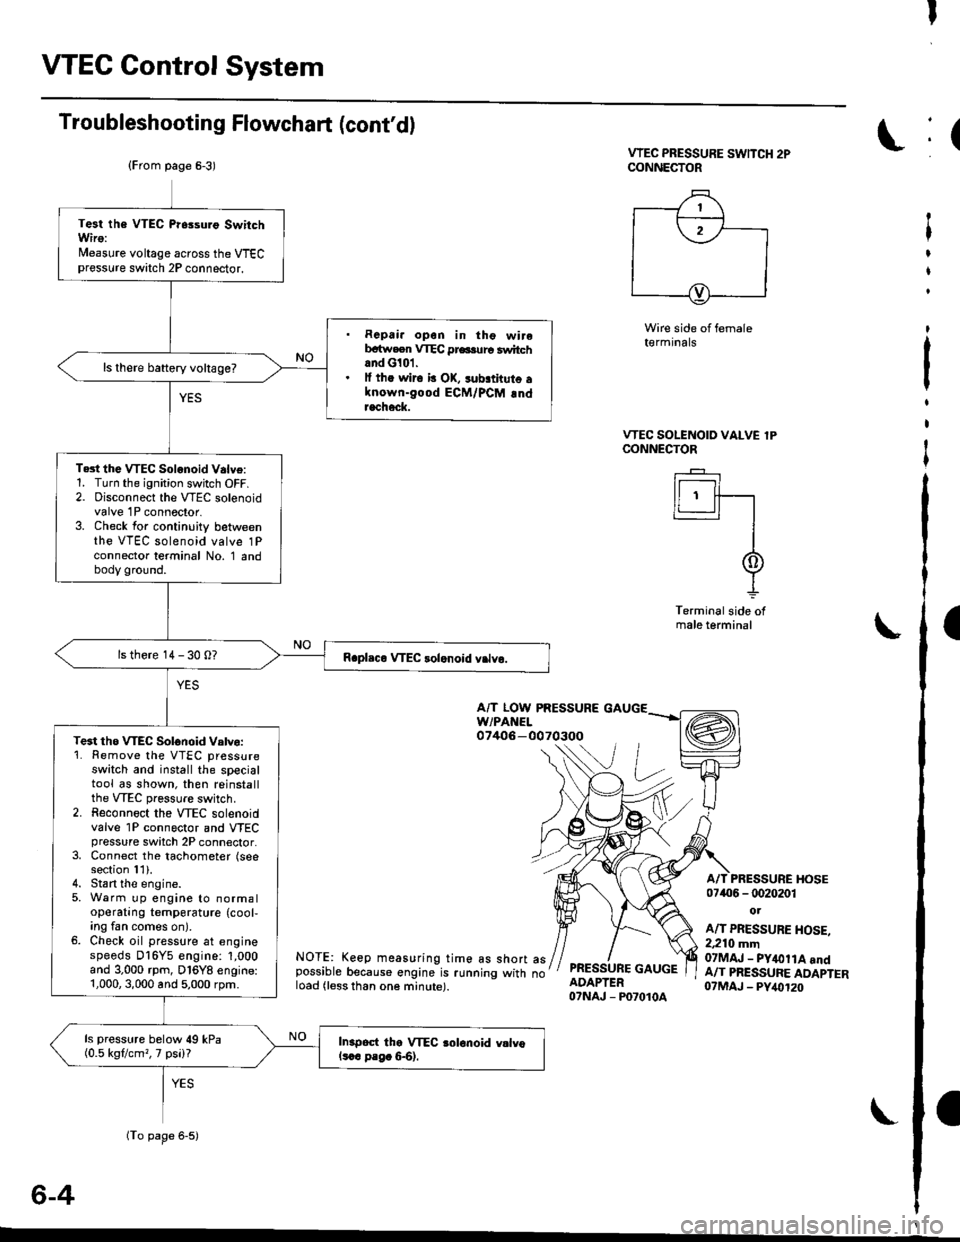 HONDA CIVIC 1997 6.G Repair Manual I
VTEC Control System
Troubleshooting Flowchart (contd)
VTEC PRESSURE SwlTCH 2PCONNECTOR
Wire side of female(€rmrnats
VTEC SOLENOID VALVE lPCONNECTOR
I r----t I
ll  ff---r�-�1
I
I
-L
Terminal s